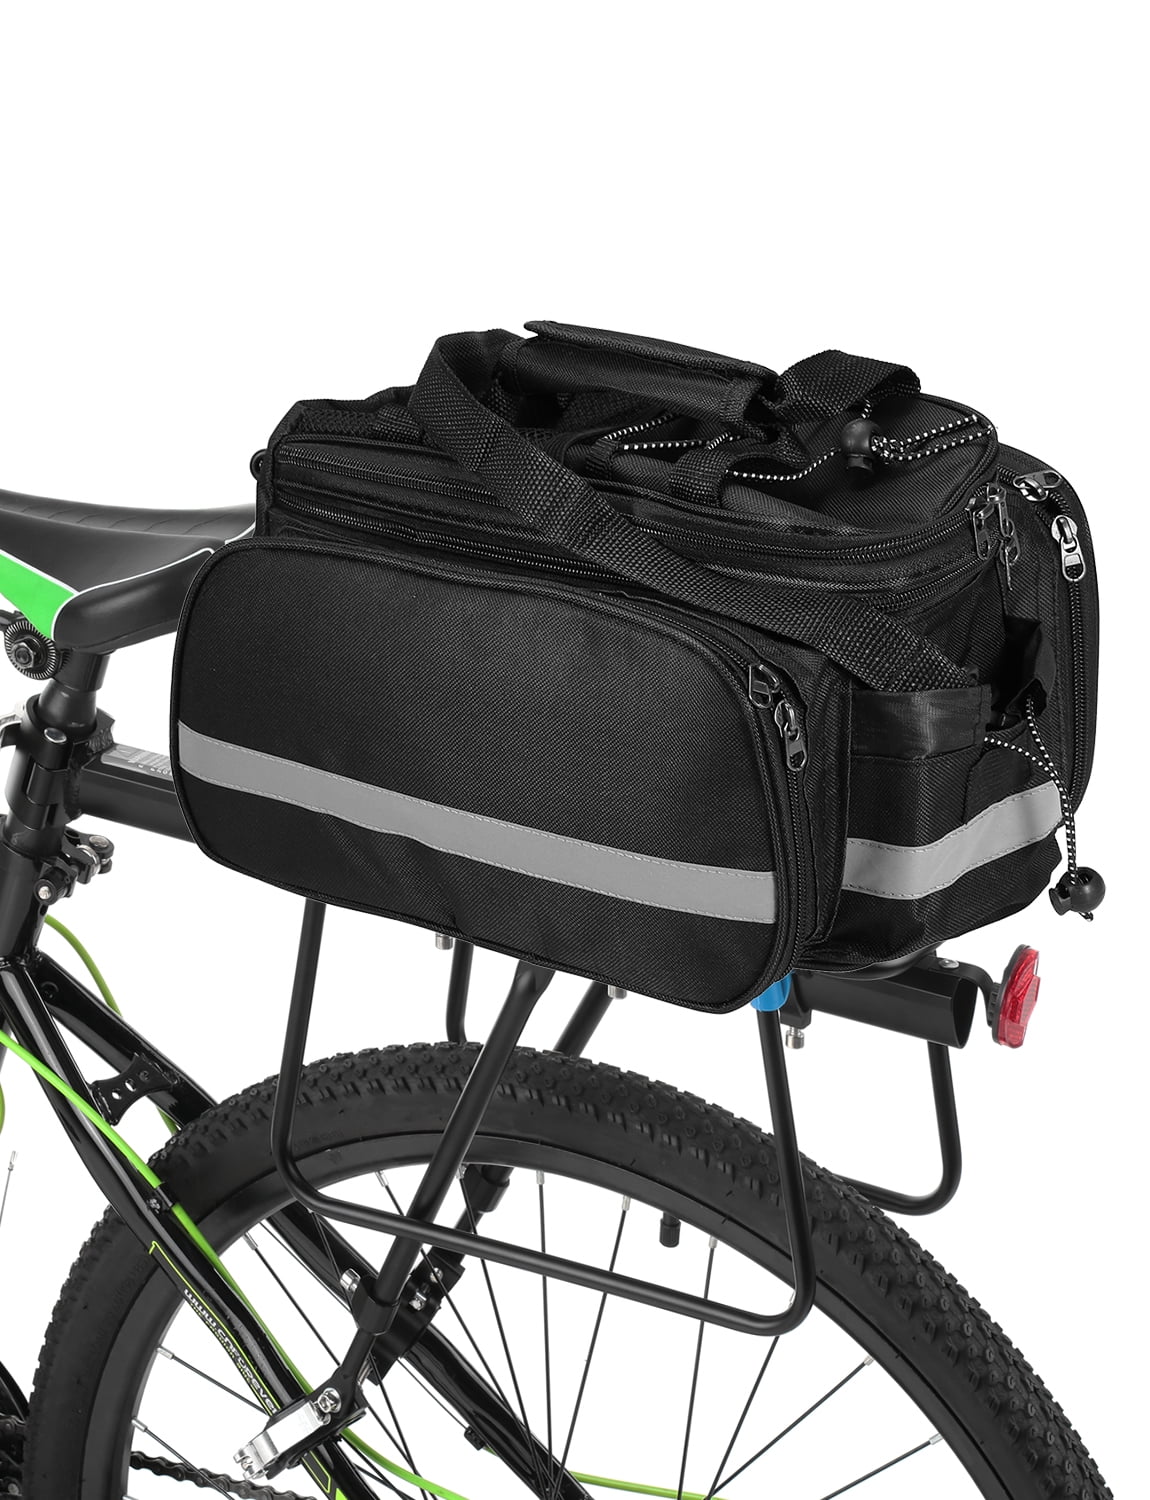 Lixada Bike Panniers Bag Waterproof Rear Seat Bicycle Bag Trunk Bags Saddle Bag with Rain Cover for Travel Camping 